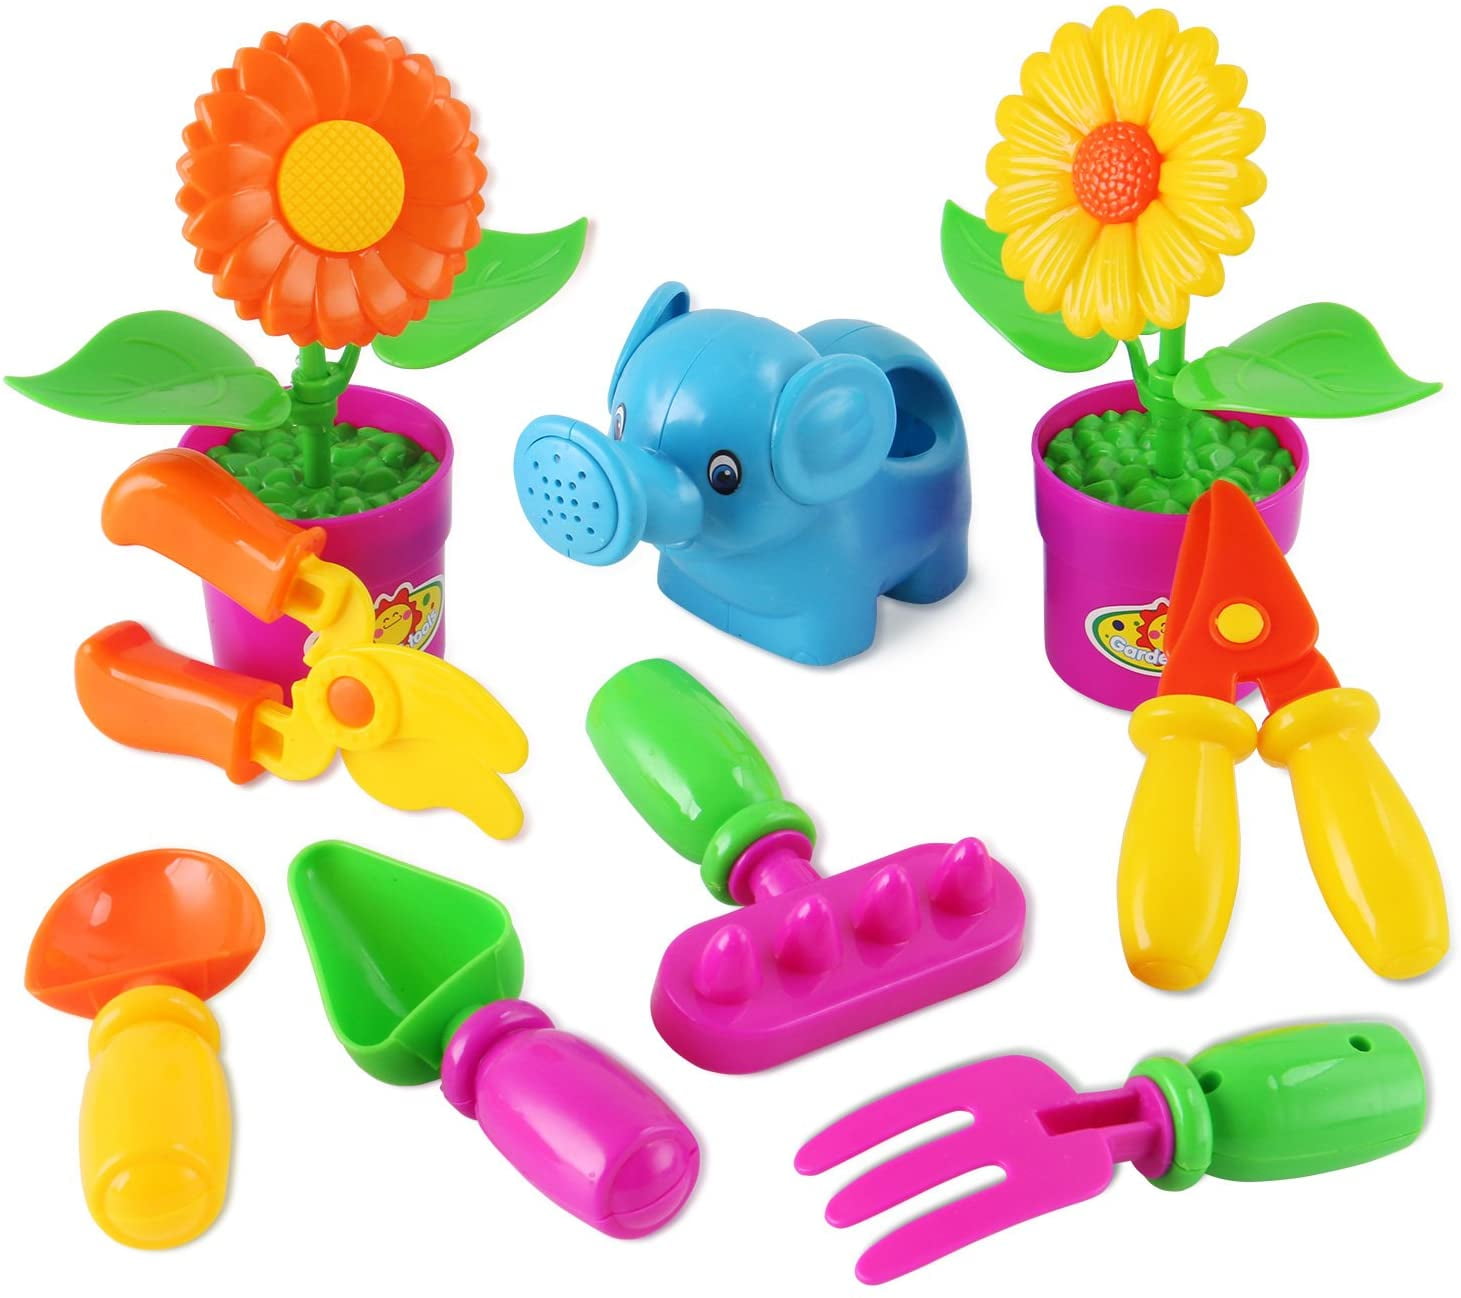 Little Garden Tool 9 Pieces of Gardening Pretend Play Toy Set for Kids 